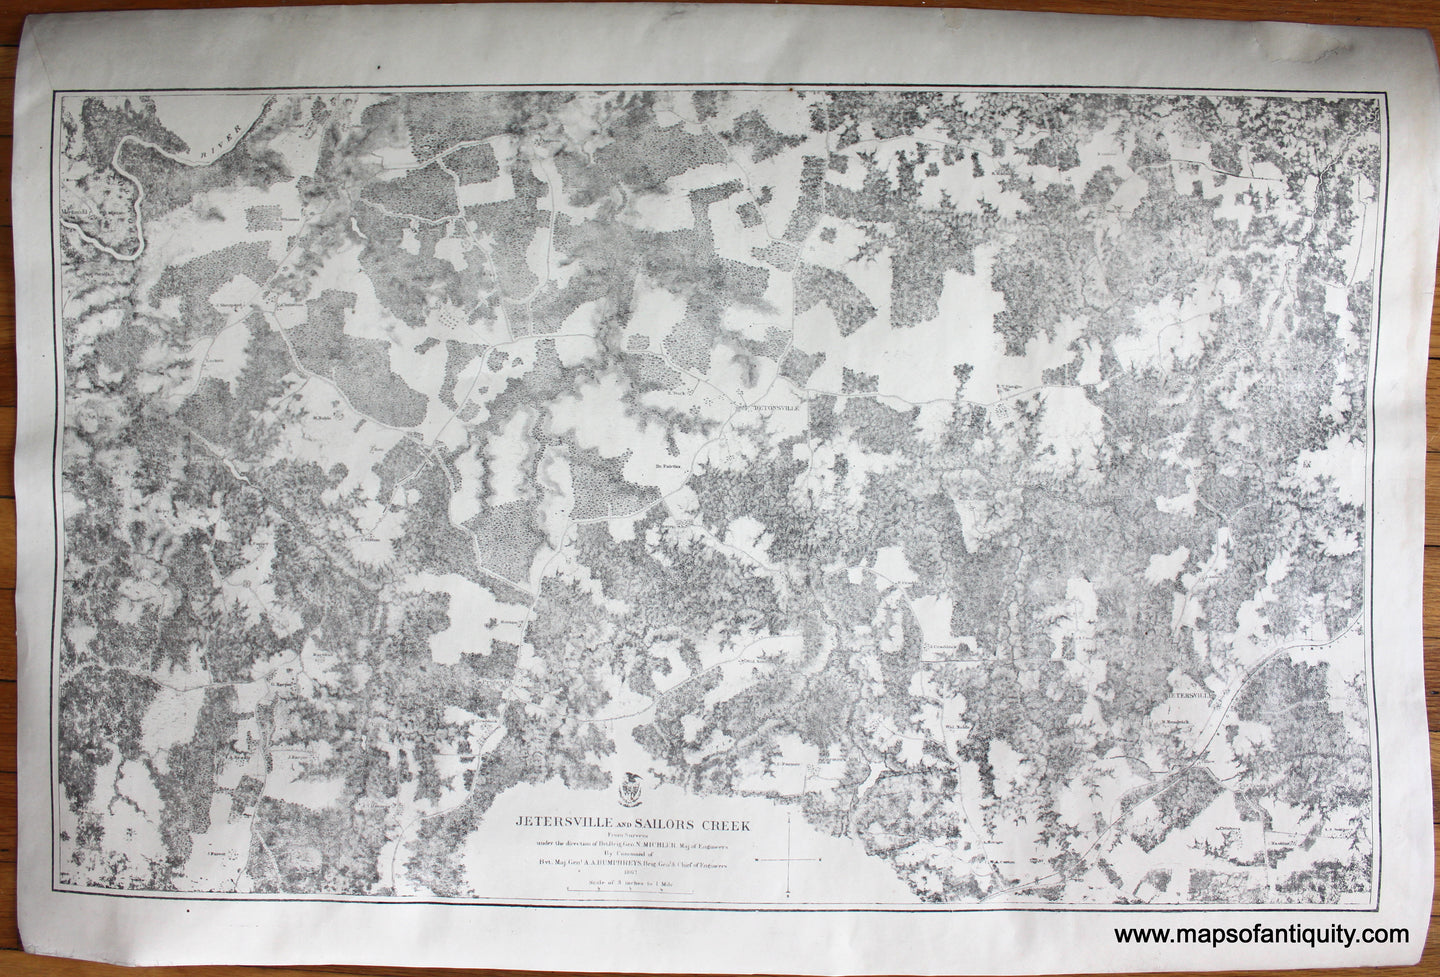 Antique-Map-Civil-War-Battle-Jetersville-sailors-creek-Virginia-Bien-US-War-Department-1867-1860s-1800s